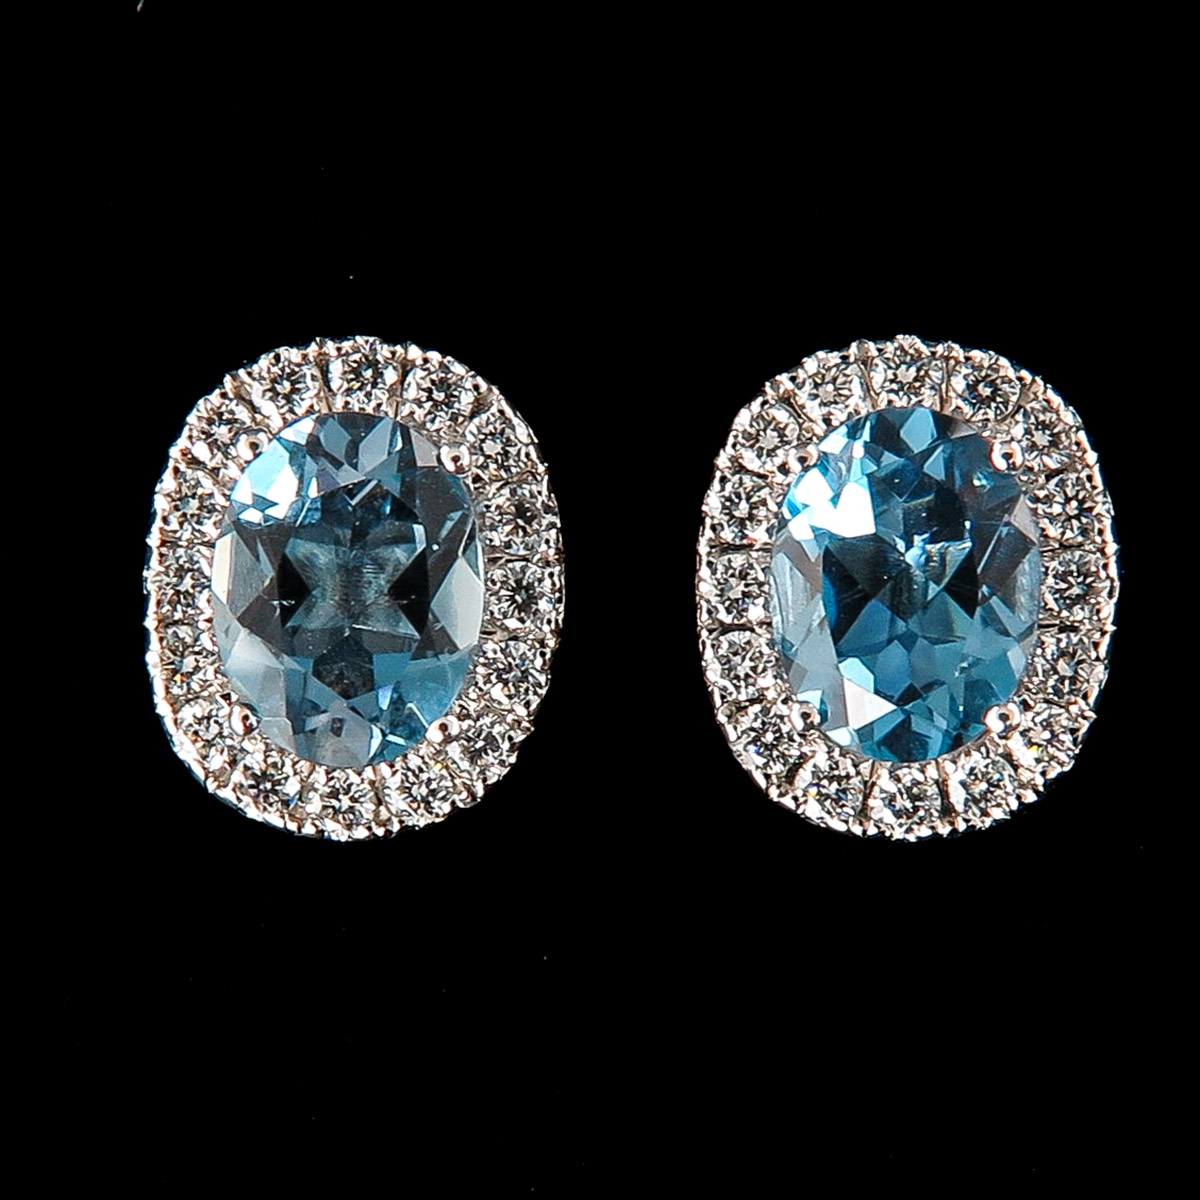 A Pair of London Blue Topaz and Diamond Earrings